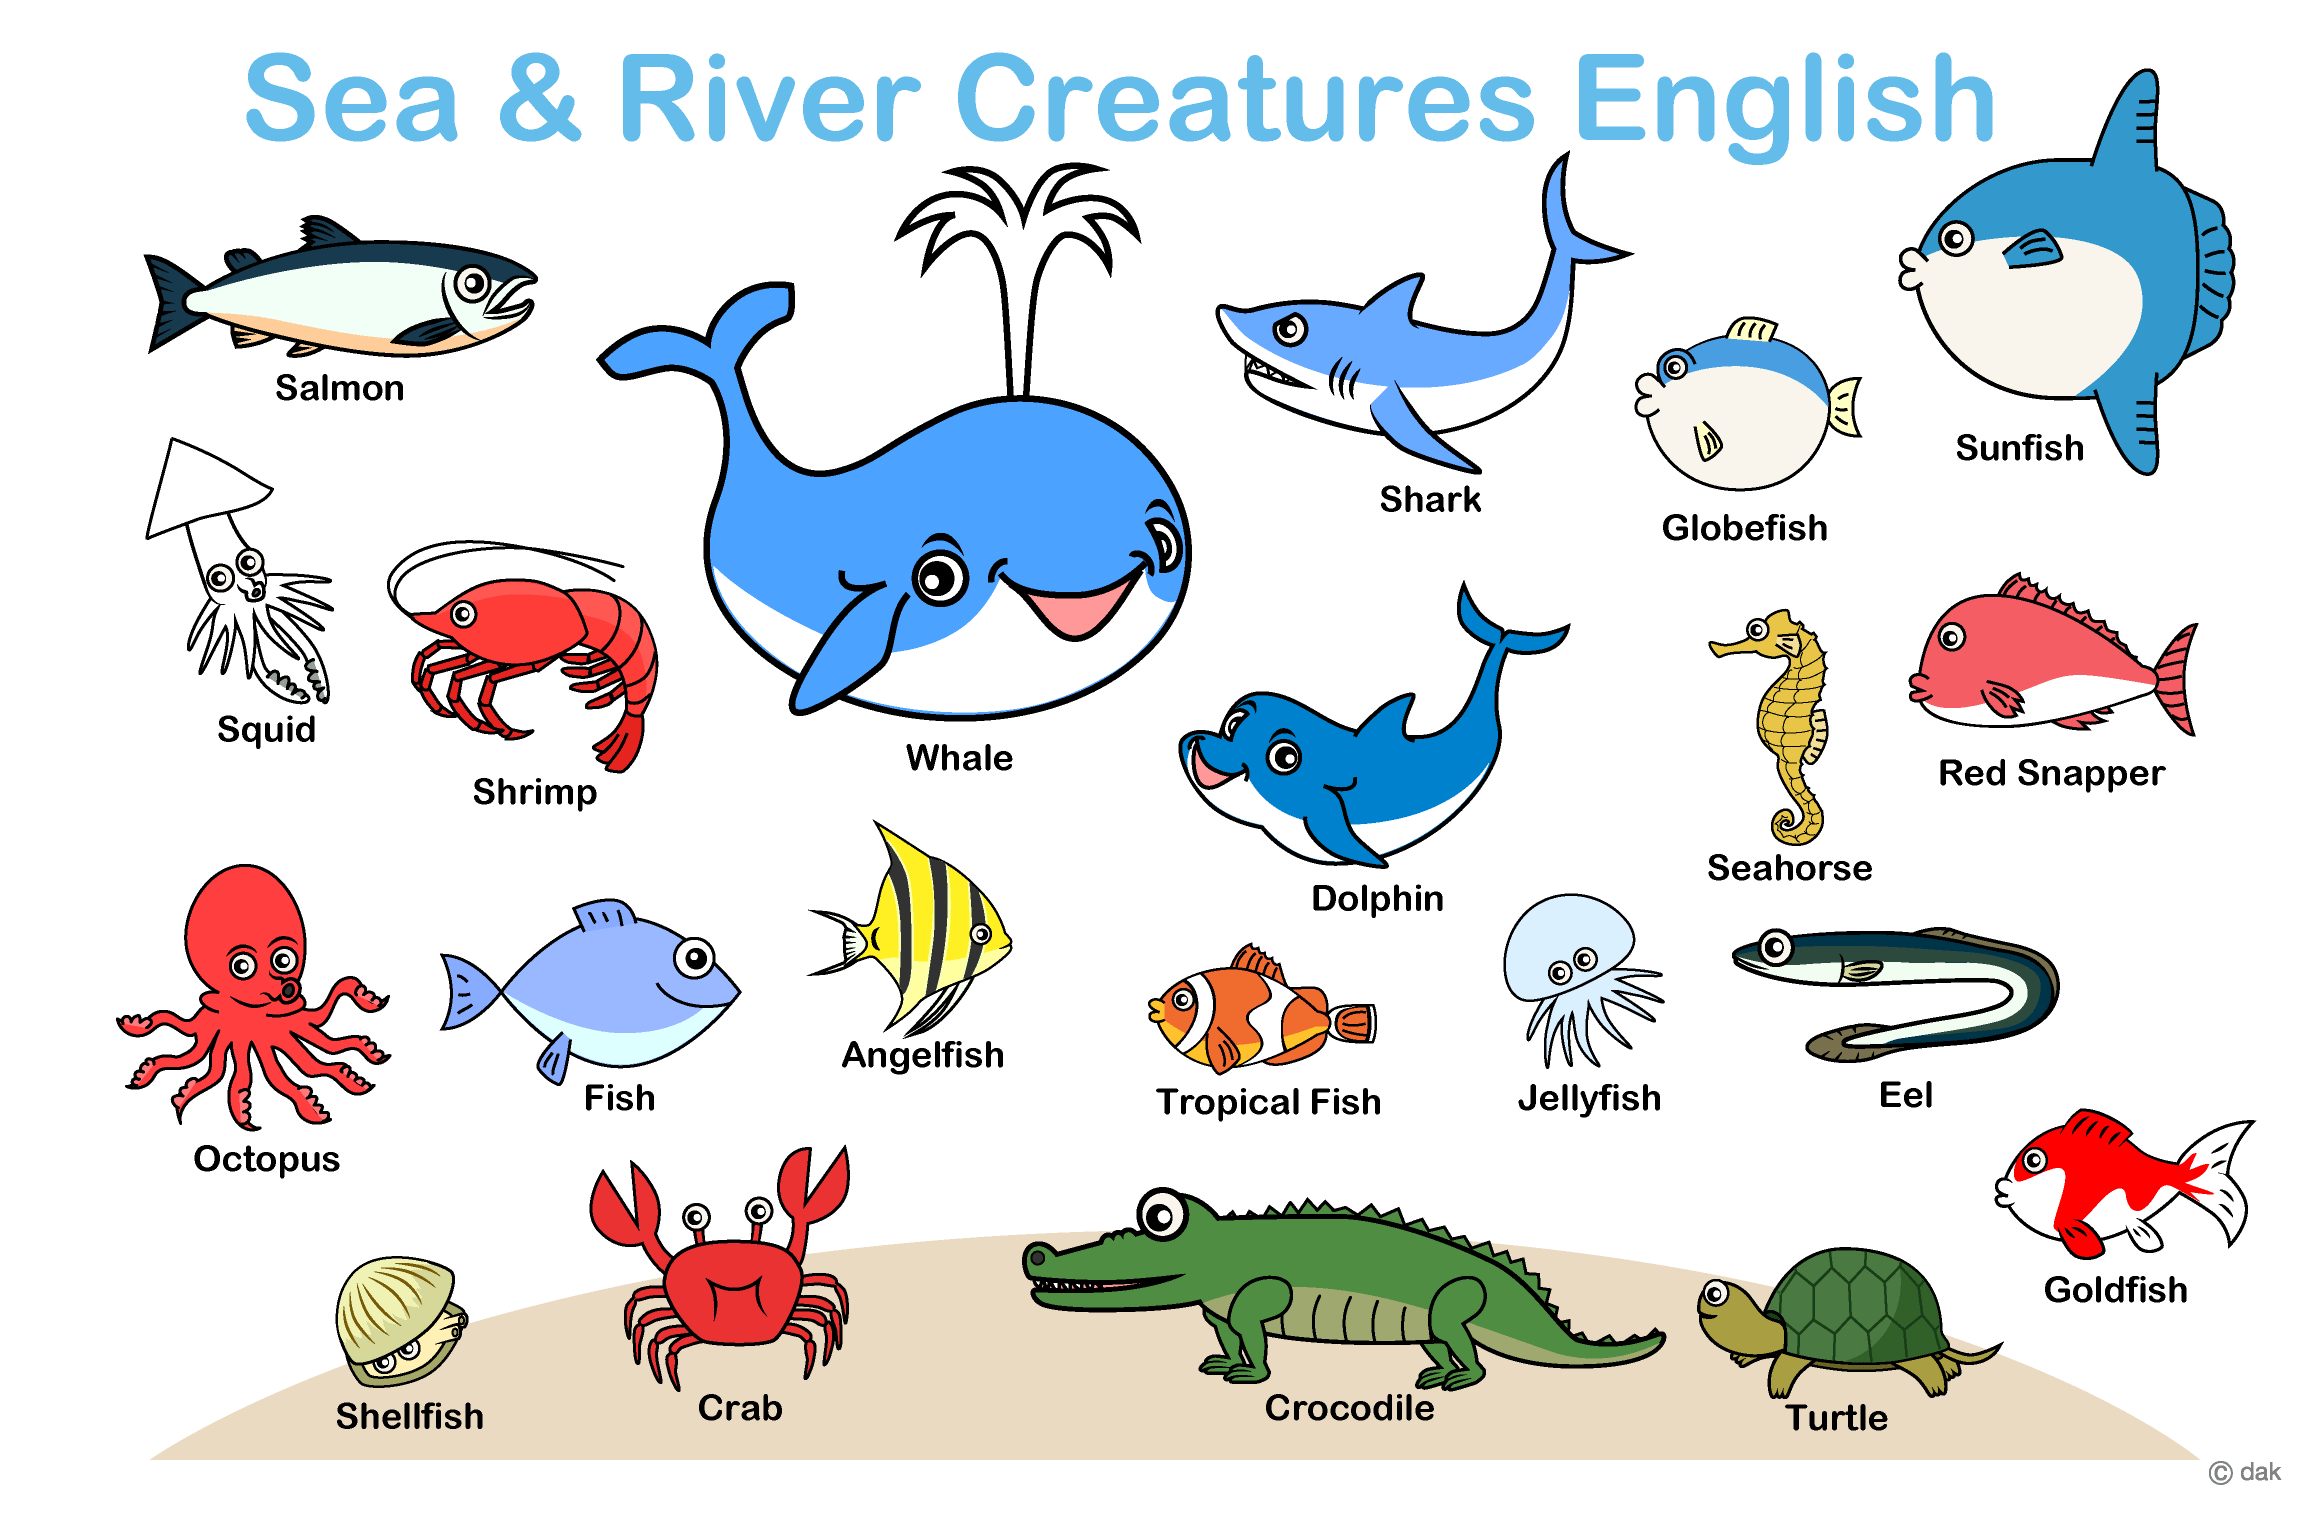 Fishing на английском. Рыба по английскому. Все рыбы по английскому. Разные рыбы на английском языке. Fish картинка для детей на английском.